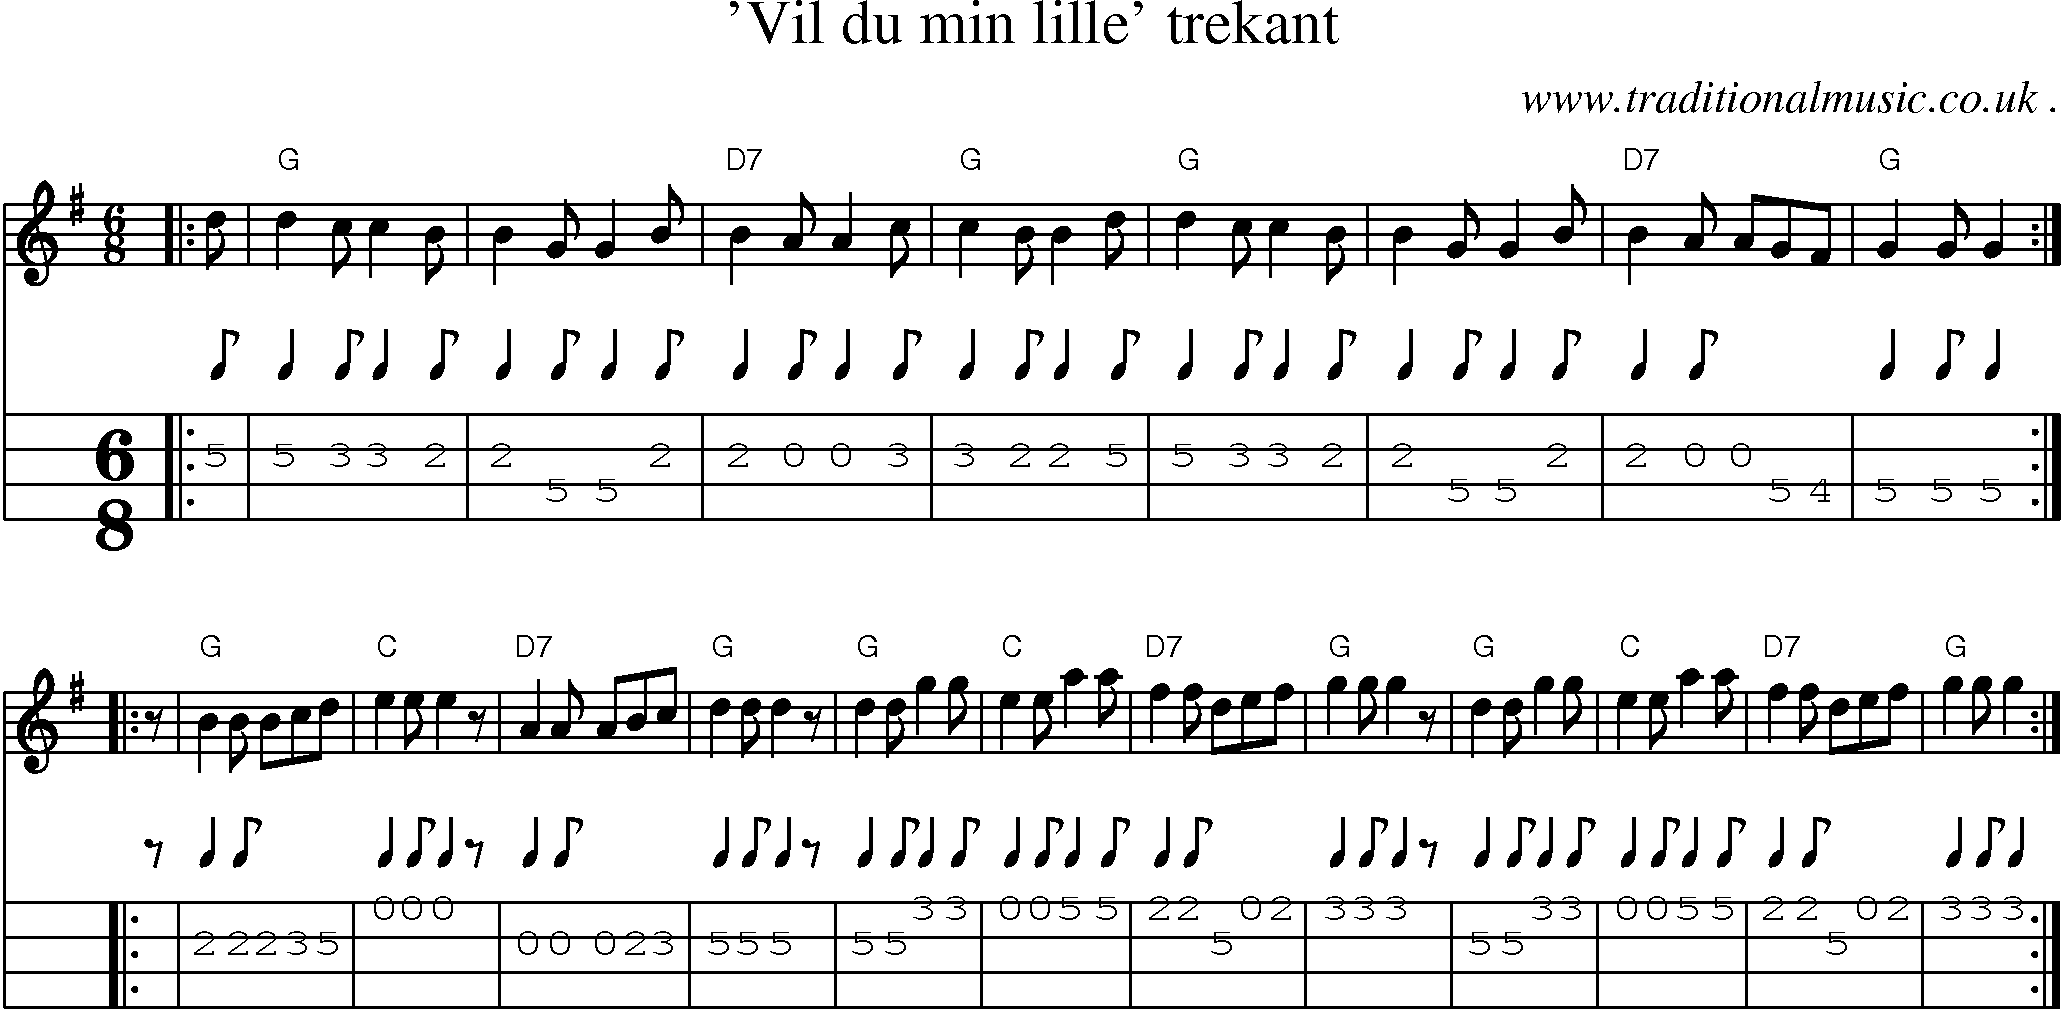 Sheet-music  score, Chords and Mandolin Tabs for Vil Du Min Lille Trekant